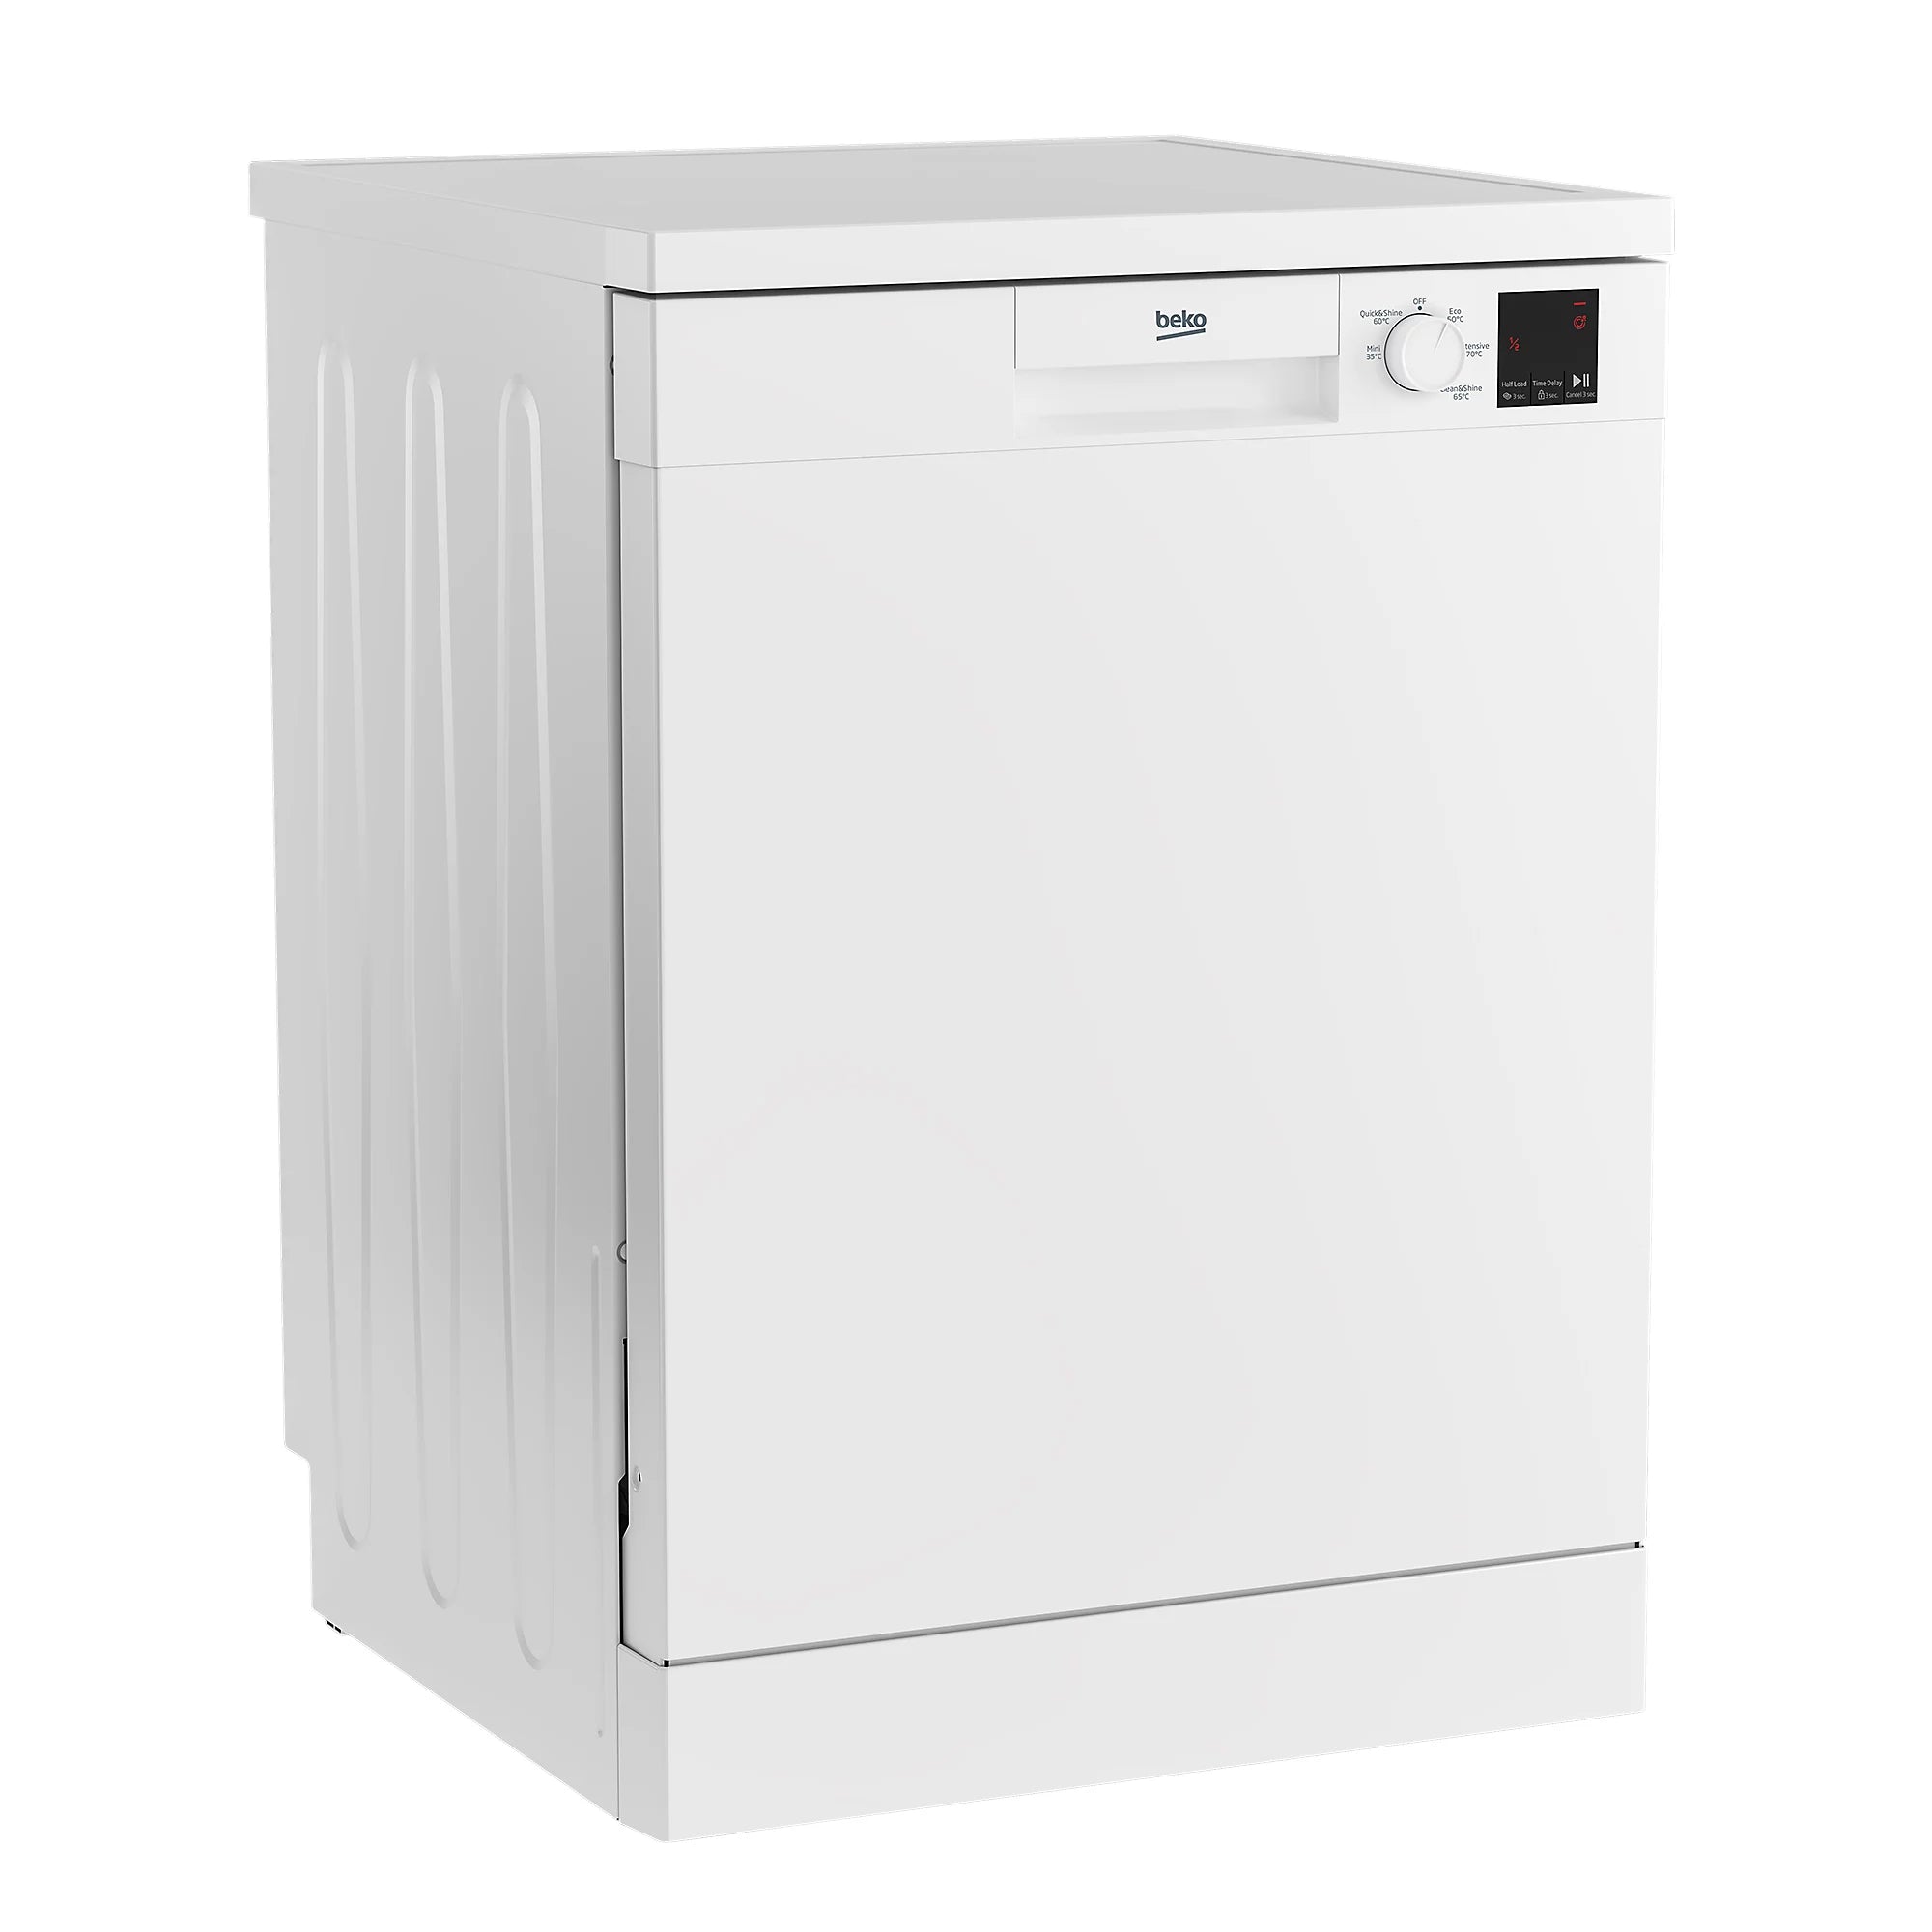 Beko DFN05Q10W Freestanding Full size Dishwasher - White 6030